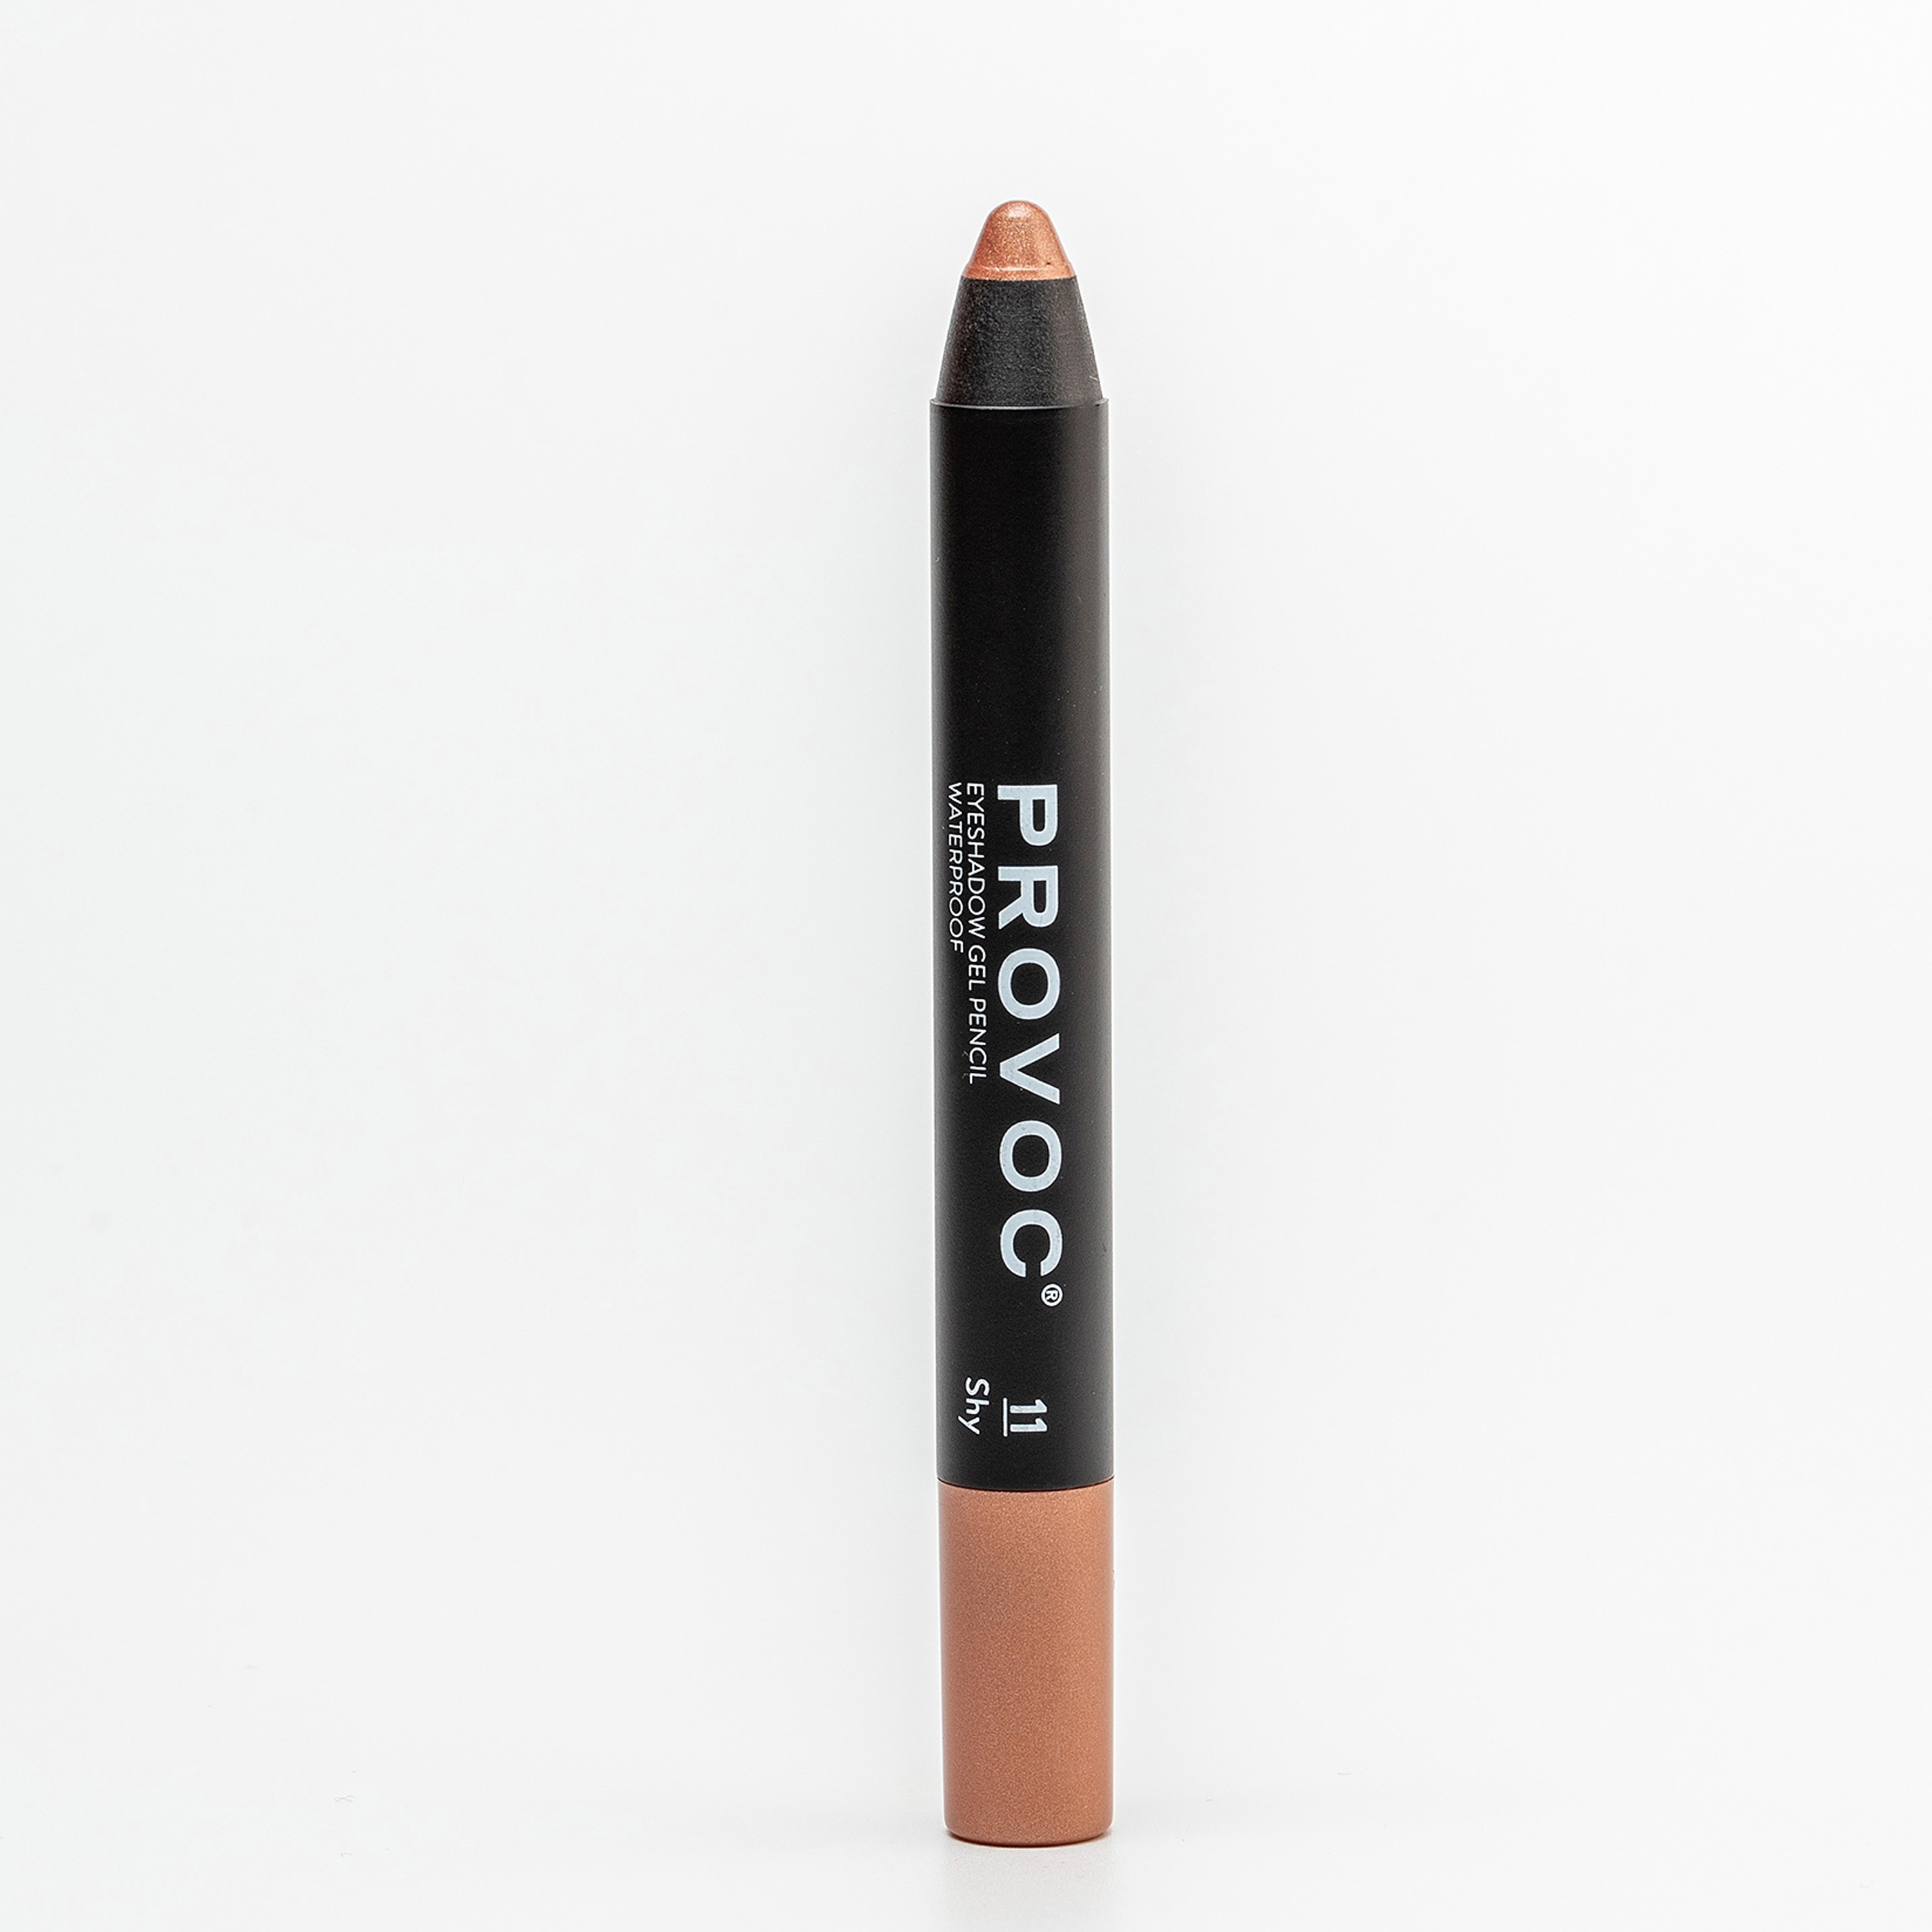 Тени-карандаш PROVOC Eyeshadow Pencil L водостойкие, шиммер 11 персиковый, 2,3 г тени для век natural blisses шиммер хаки